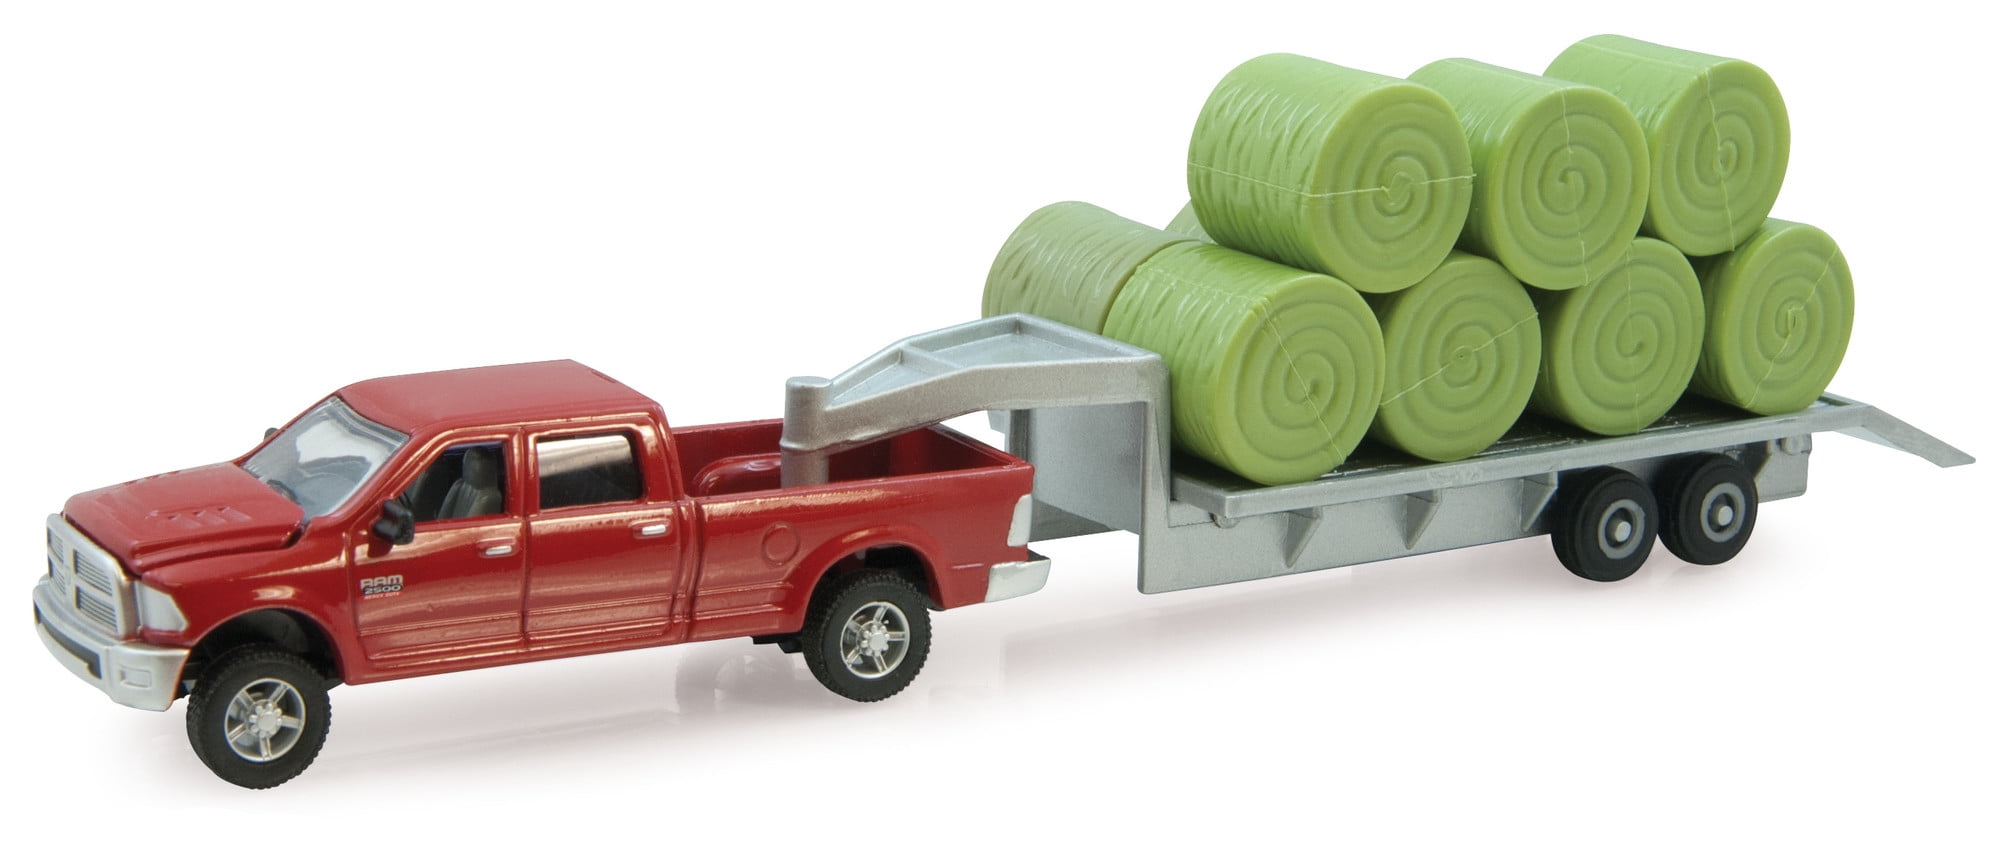 1/64 CUSTOM dodge 2 tone 2500 cummins 4 door dump bed pickup truck ERTL farm toy 